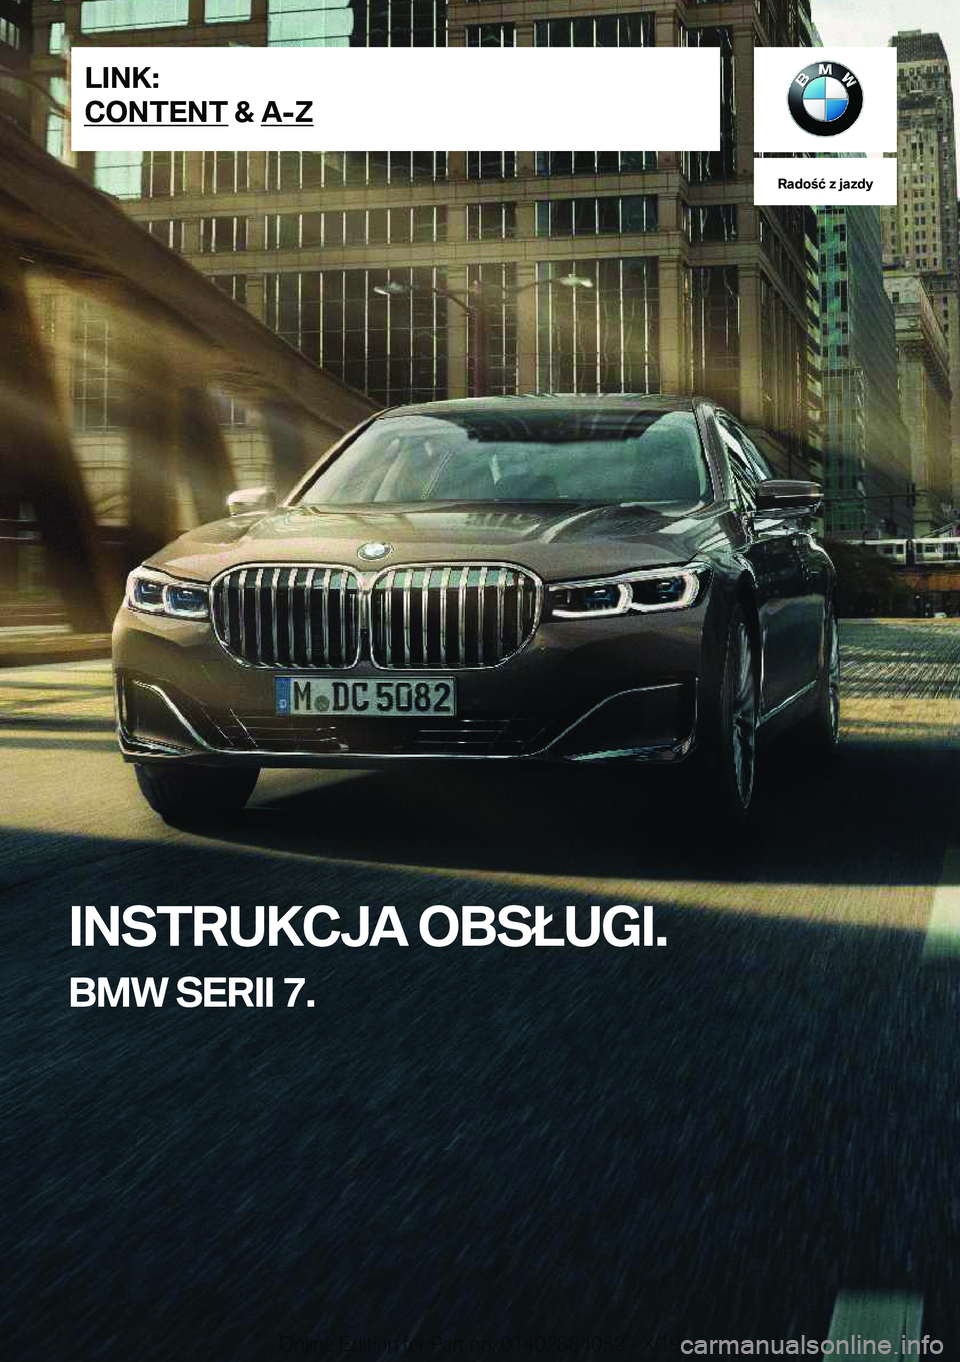 BMW 7 SERIES 2020  Instrukcja obsługi (in Polish) �R�a�d�o�ć��z��j�a�z�d�y
�I�N�S�T�R�U�K�C�J�A��O�B�S�Ł�U�G�I�.
�B�M�W��S�E�R�I�I��7�.�L�I�N�K�:
�C�O�N�T�E�N�T��&��A�-�Z�O�n�l�i�n�e��E�d�i�t�i�o�n��f�o�r��P�a�r�t��n�o�.��0�1�4�0�2�8�